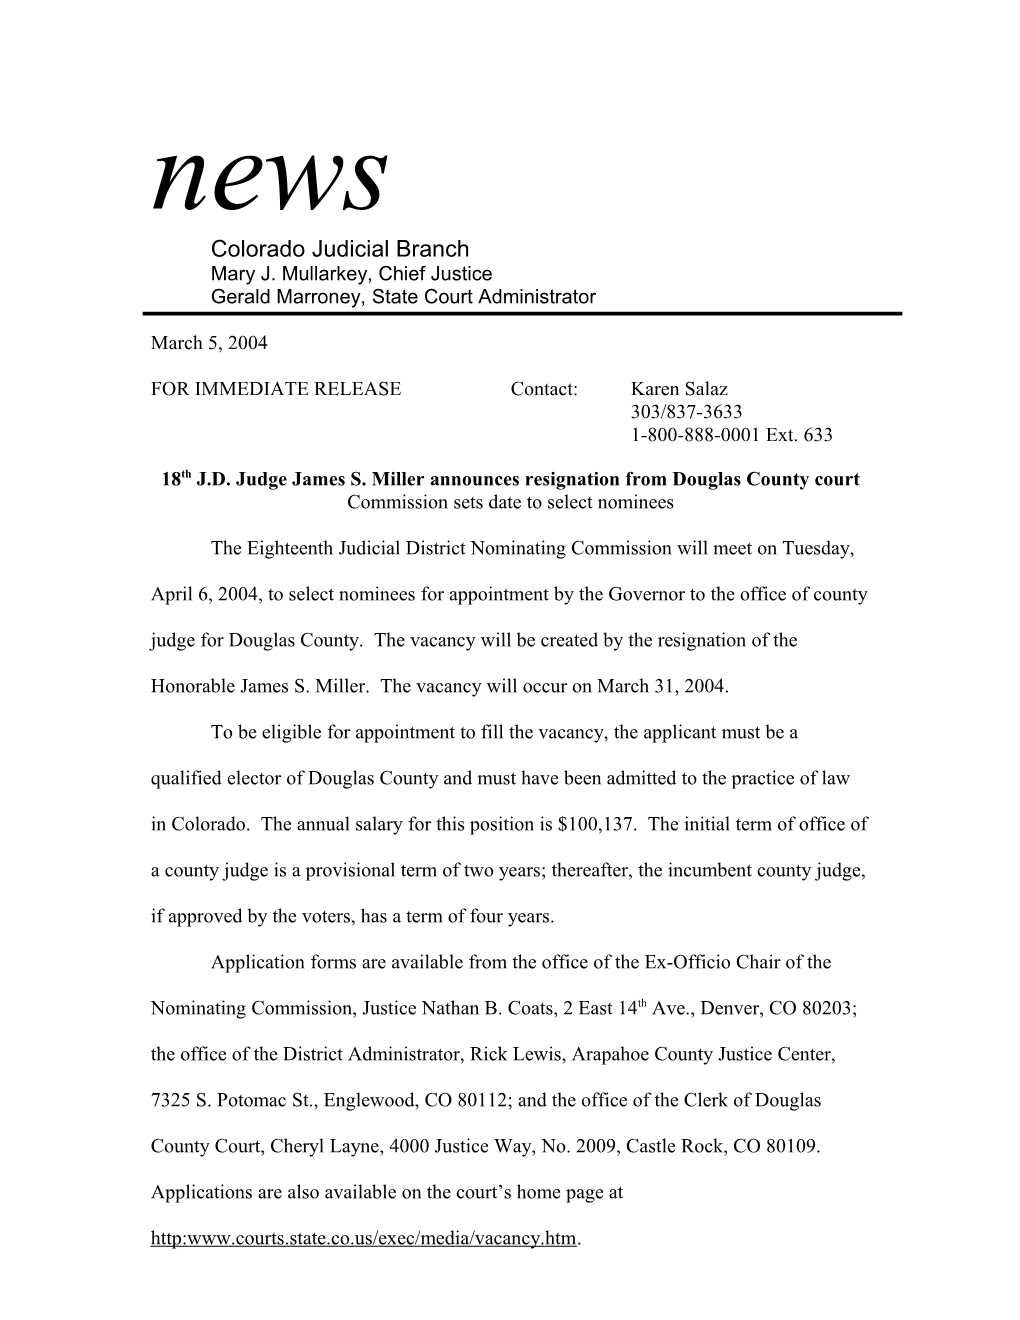 18Th J.D. Judge James S. Miller Announces Resignation from Douglas County Court